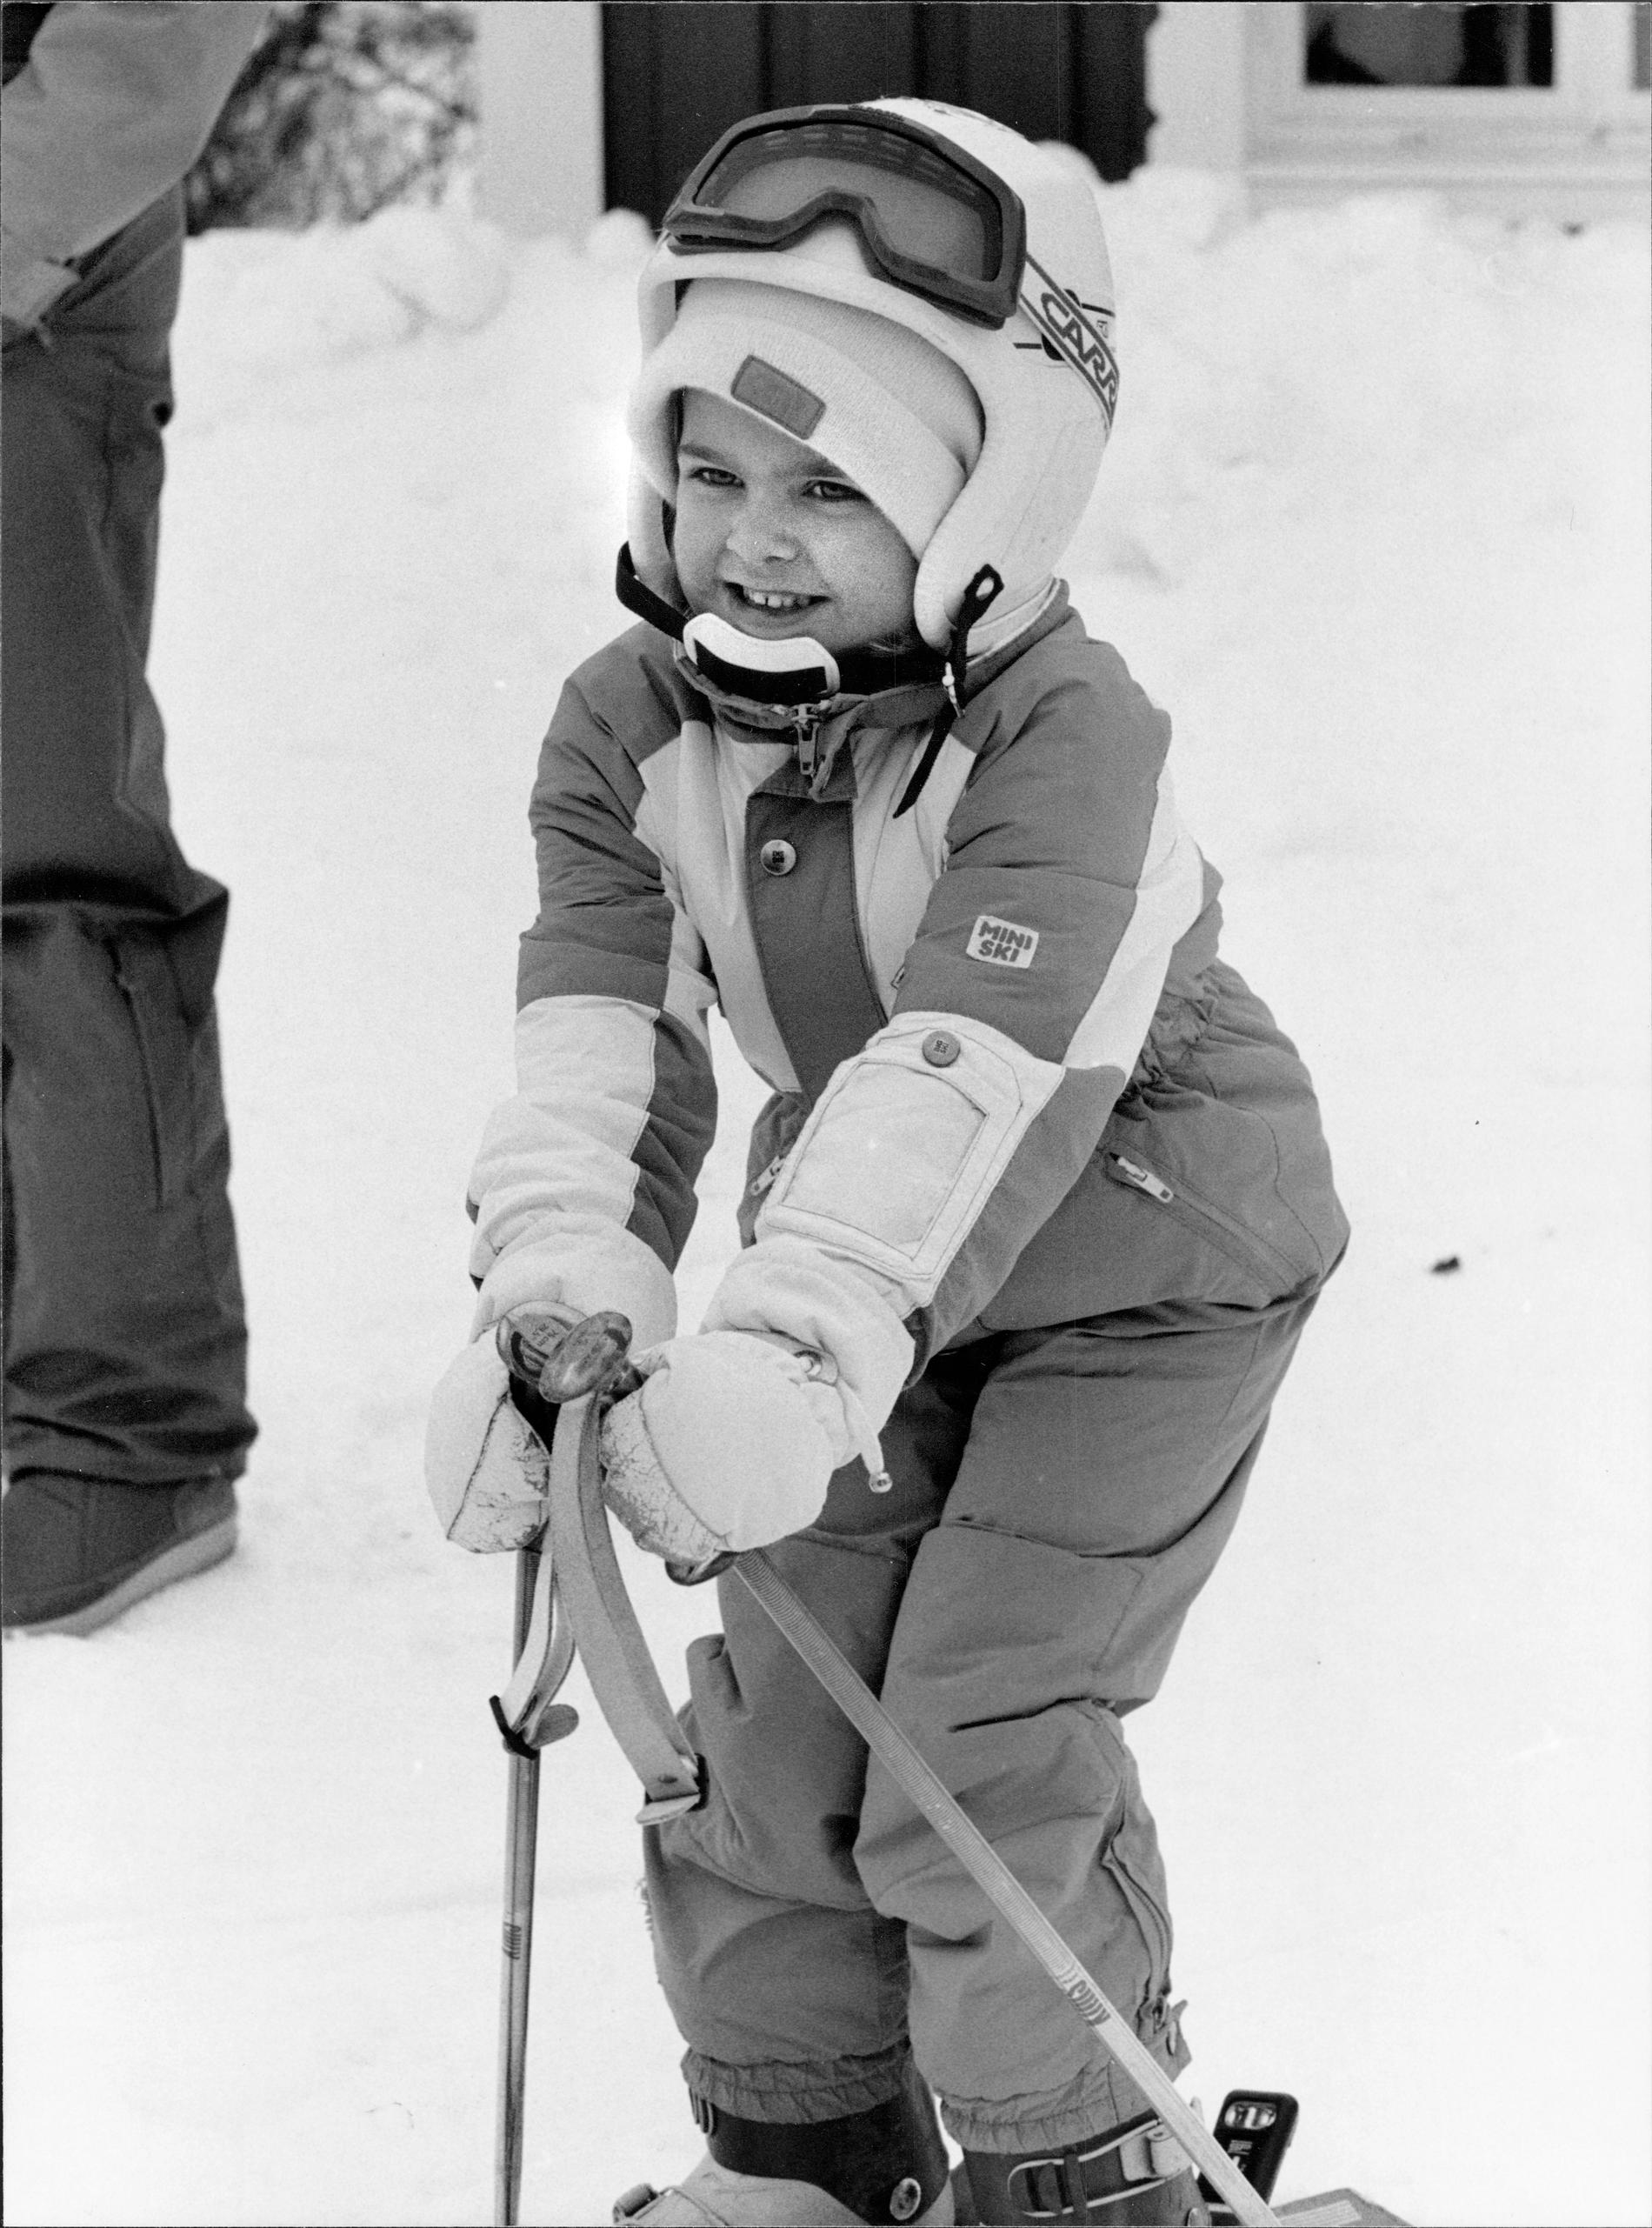 Prinsessan Madeleine åker skidor 1987.